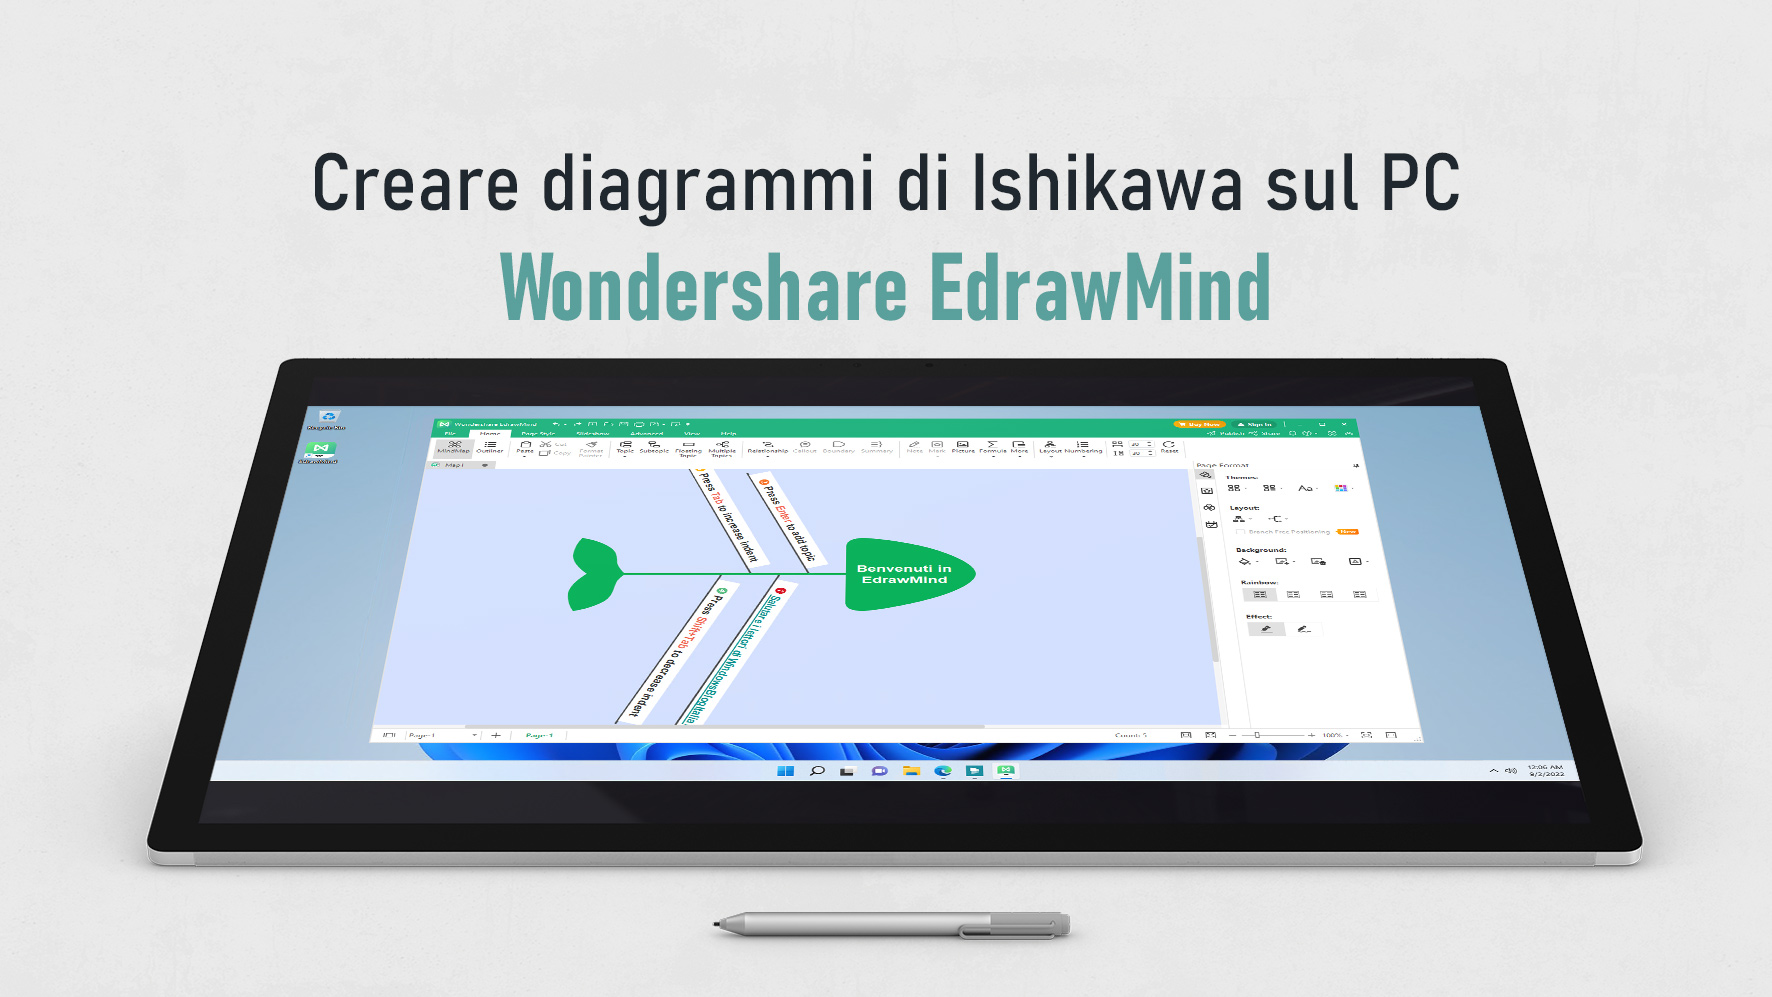 Wondershare EdrawMind - Come creare un diagramma di Ishikawa